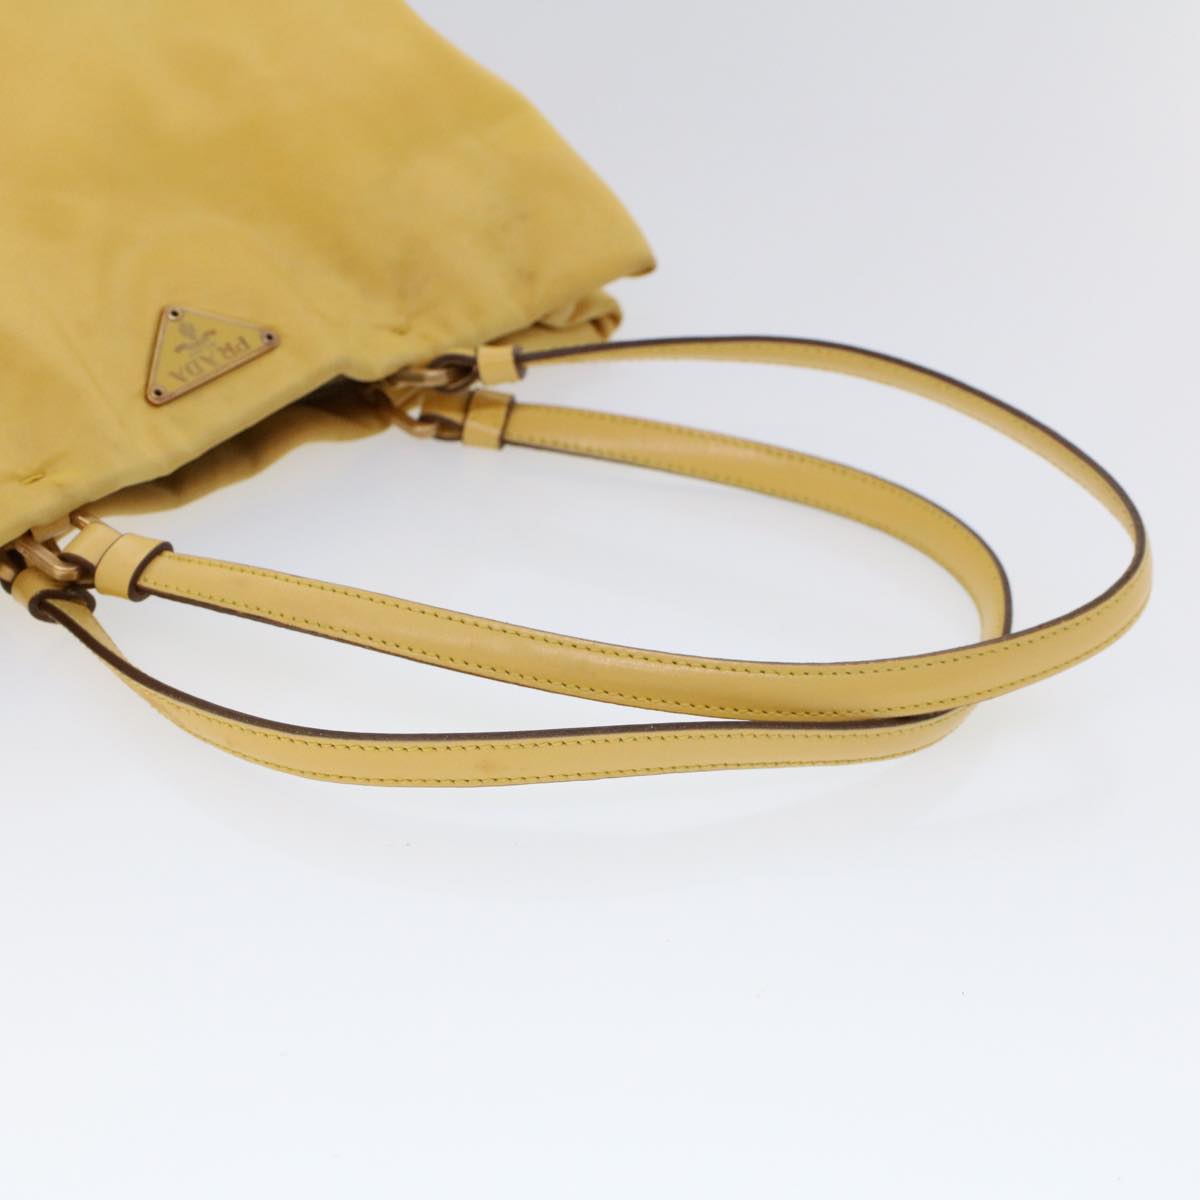 PRADA Tote Bag Nylon Leather Yellow Auth 53710